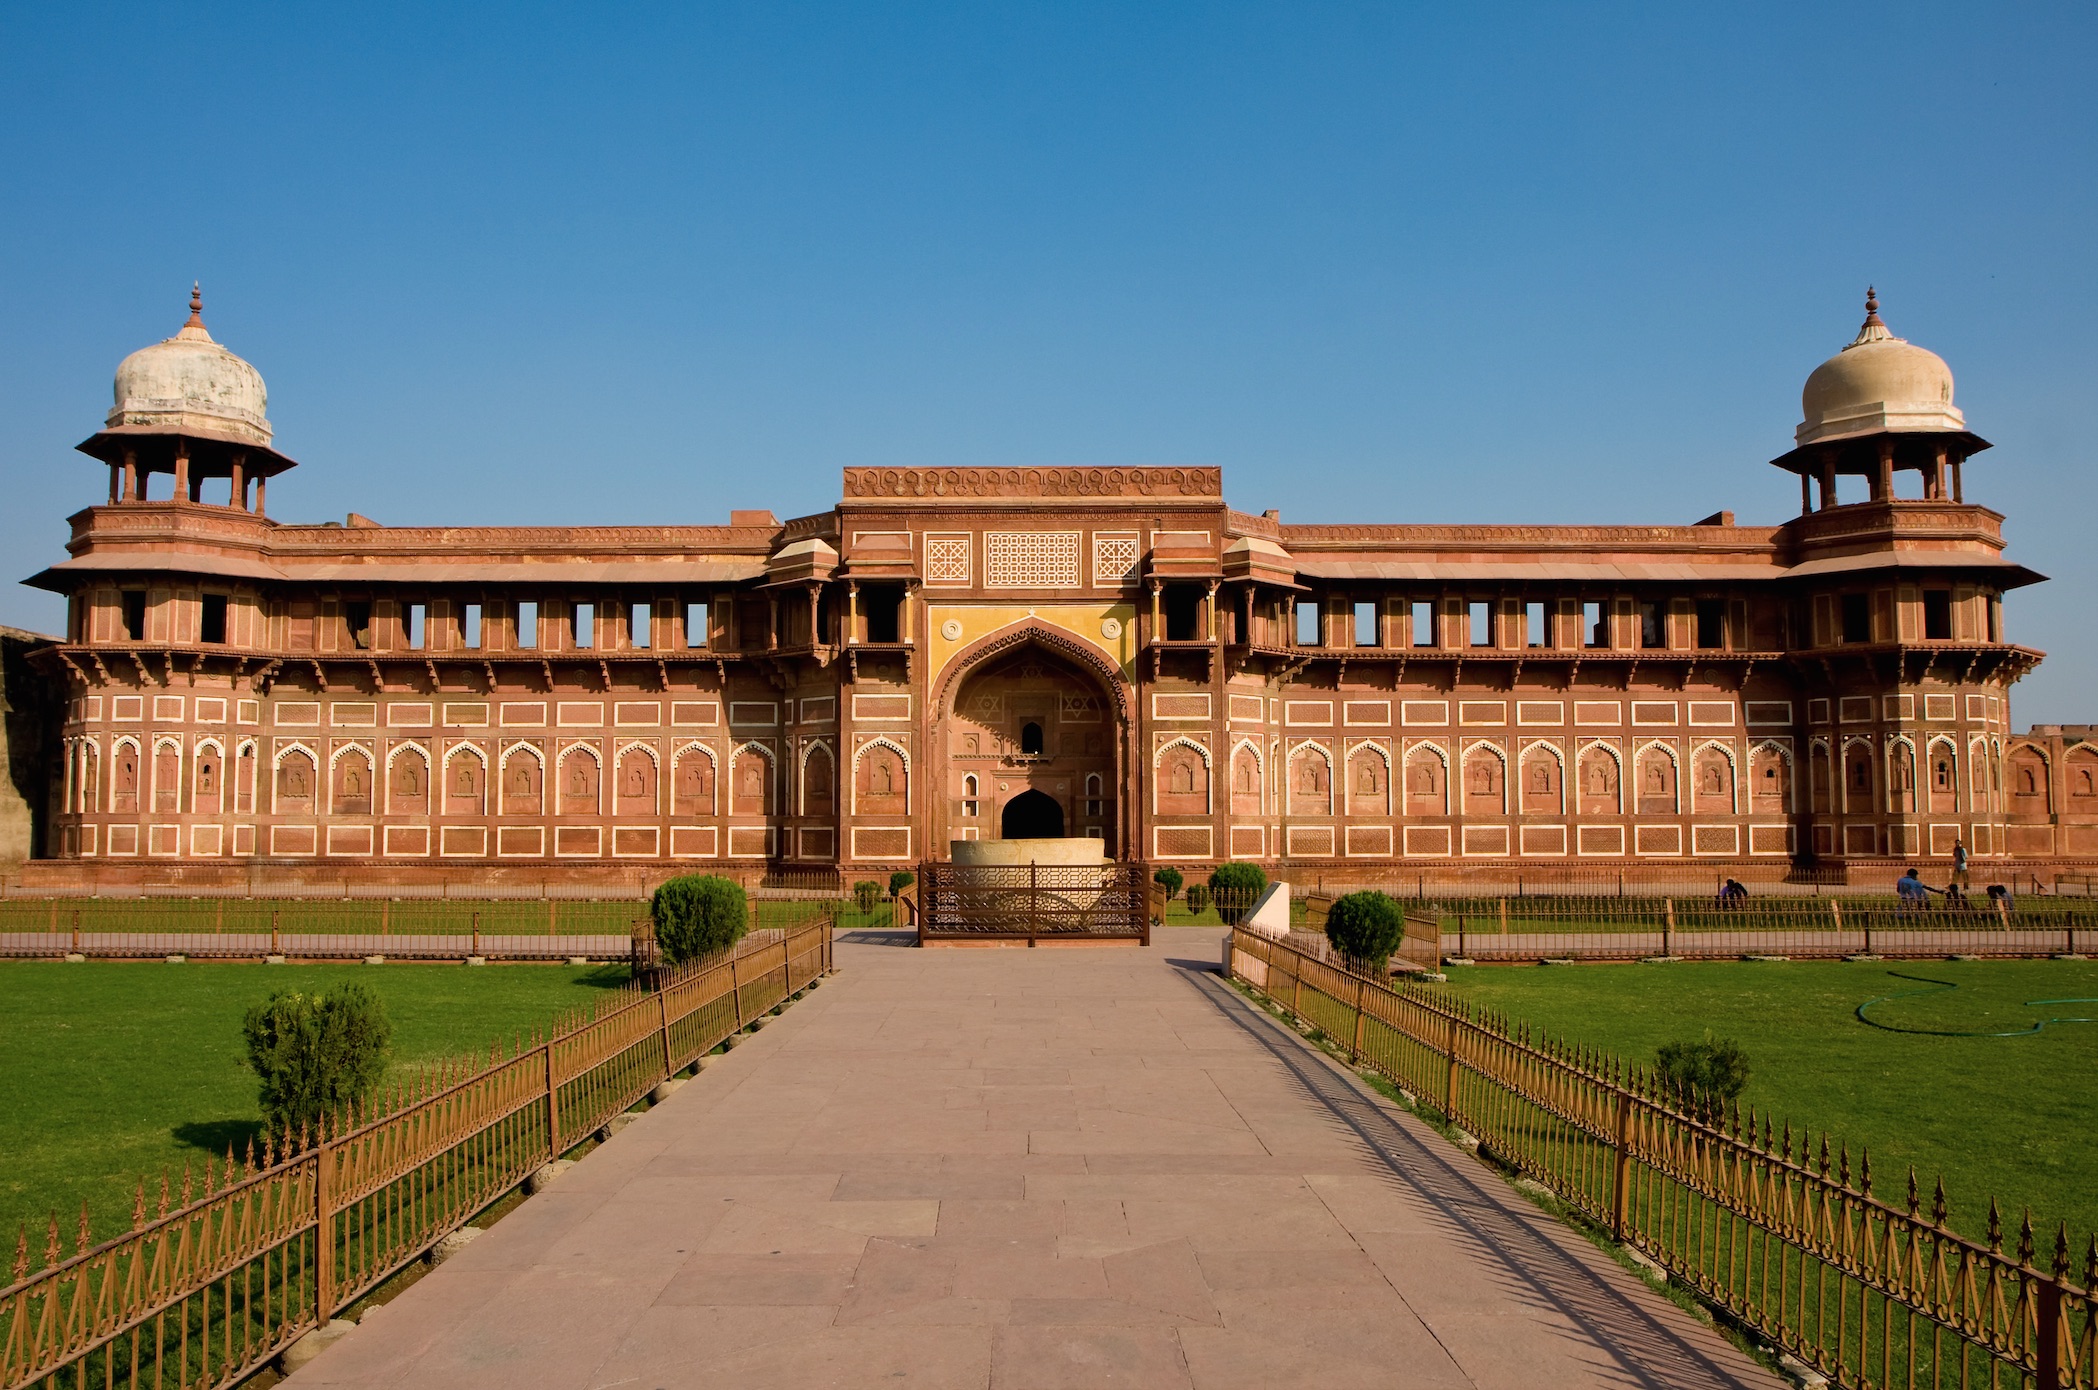 Destination: The Agra Fort image